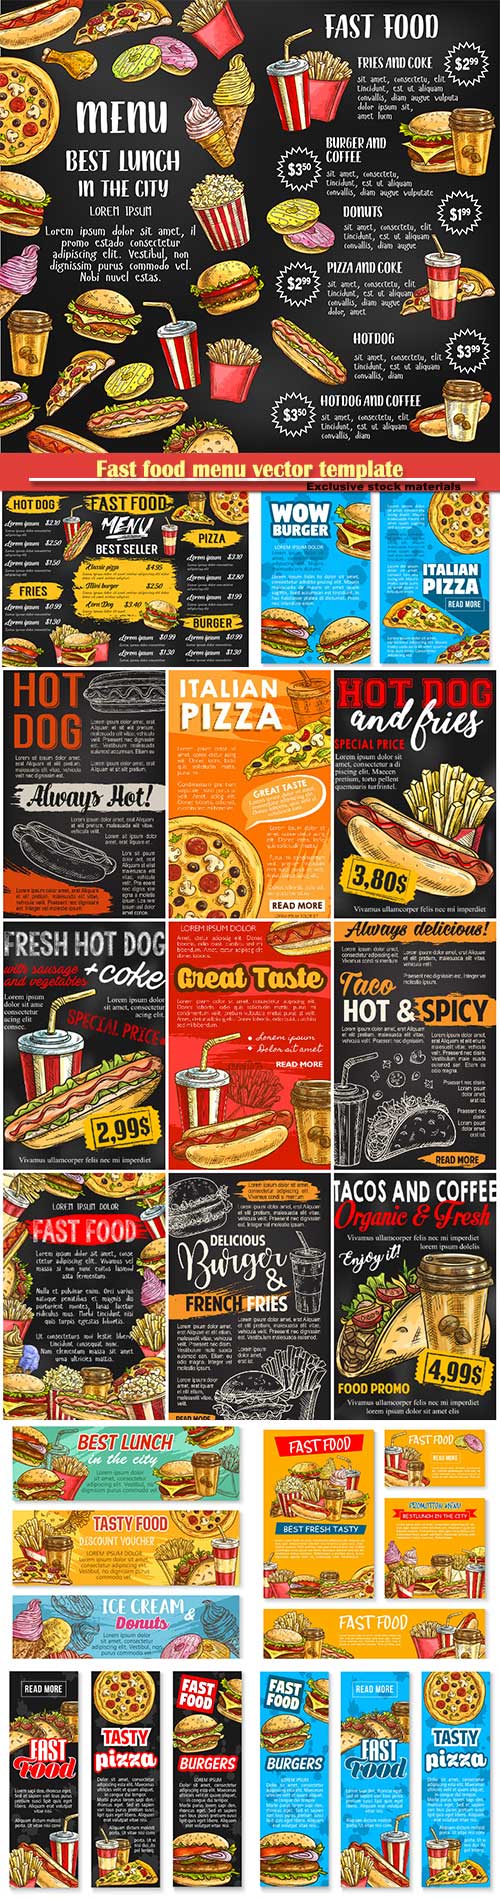 Fast food menu vector template, cheeseburger, burger, hotdog, sandwich, sna ...